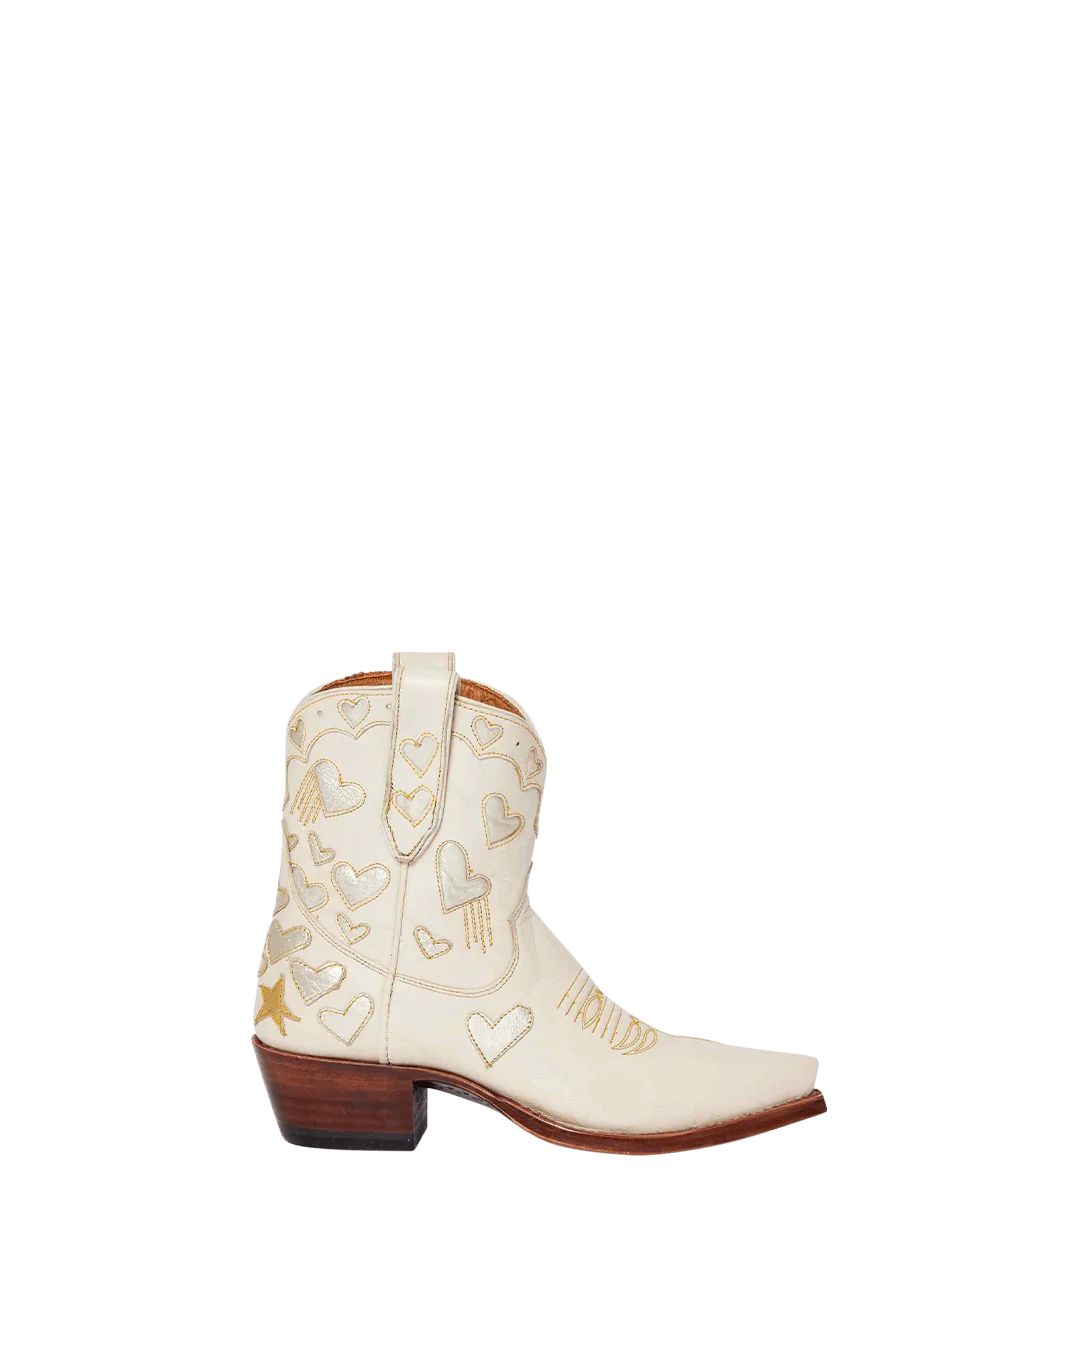 Natalie Crème | Luxury Fashion Women's Cowboy Boots | Miron Crosby | Miron Crosby